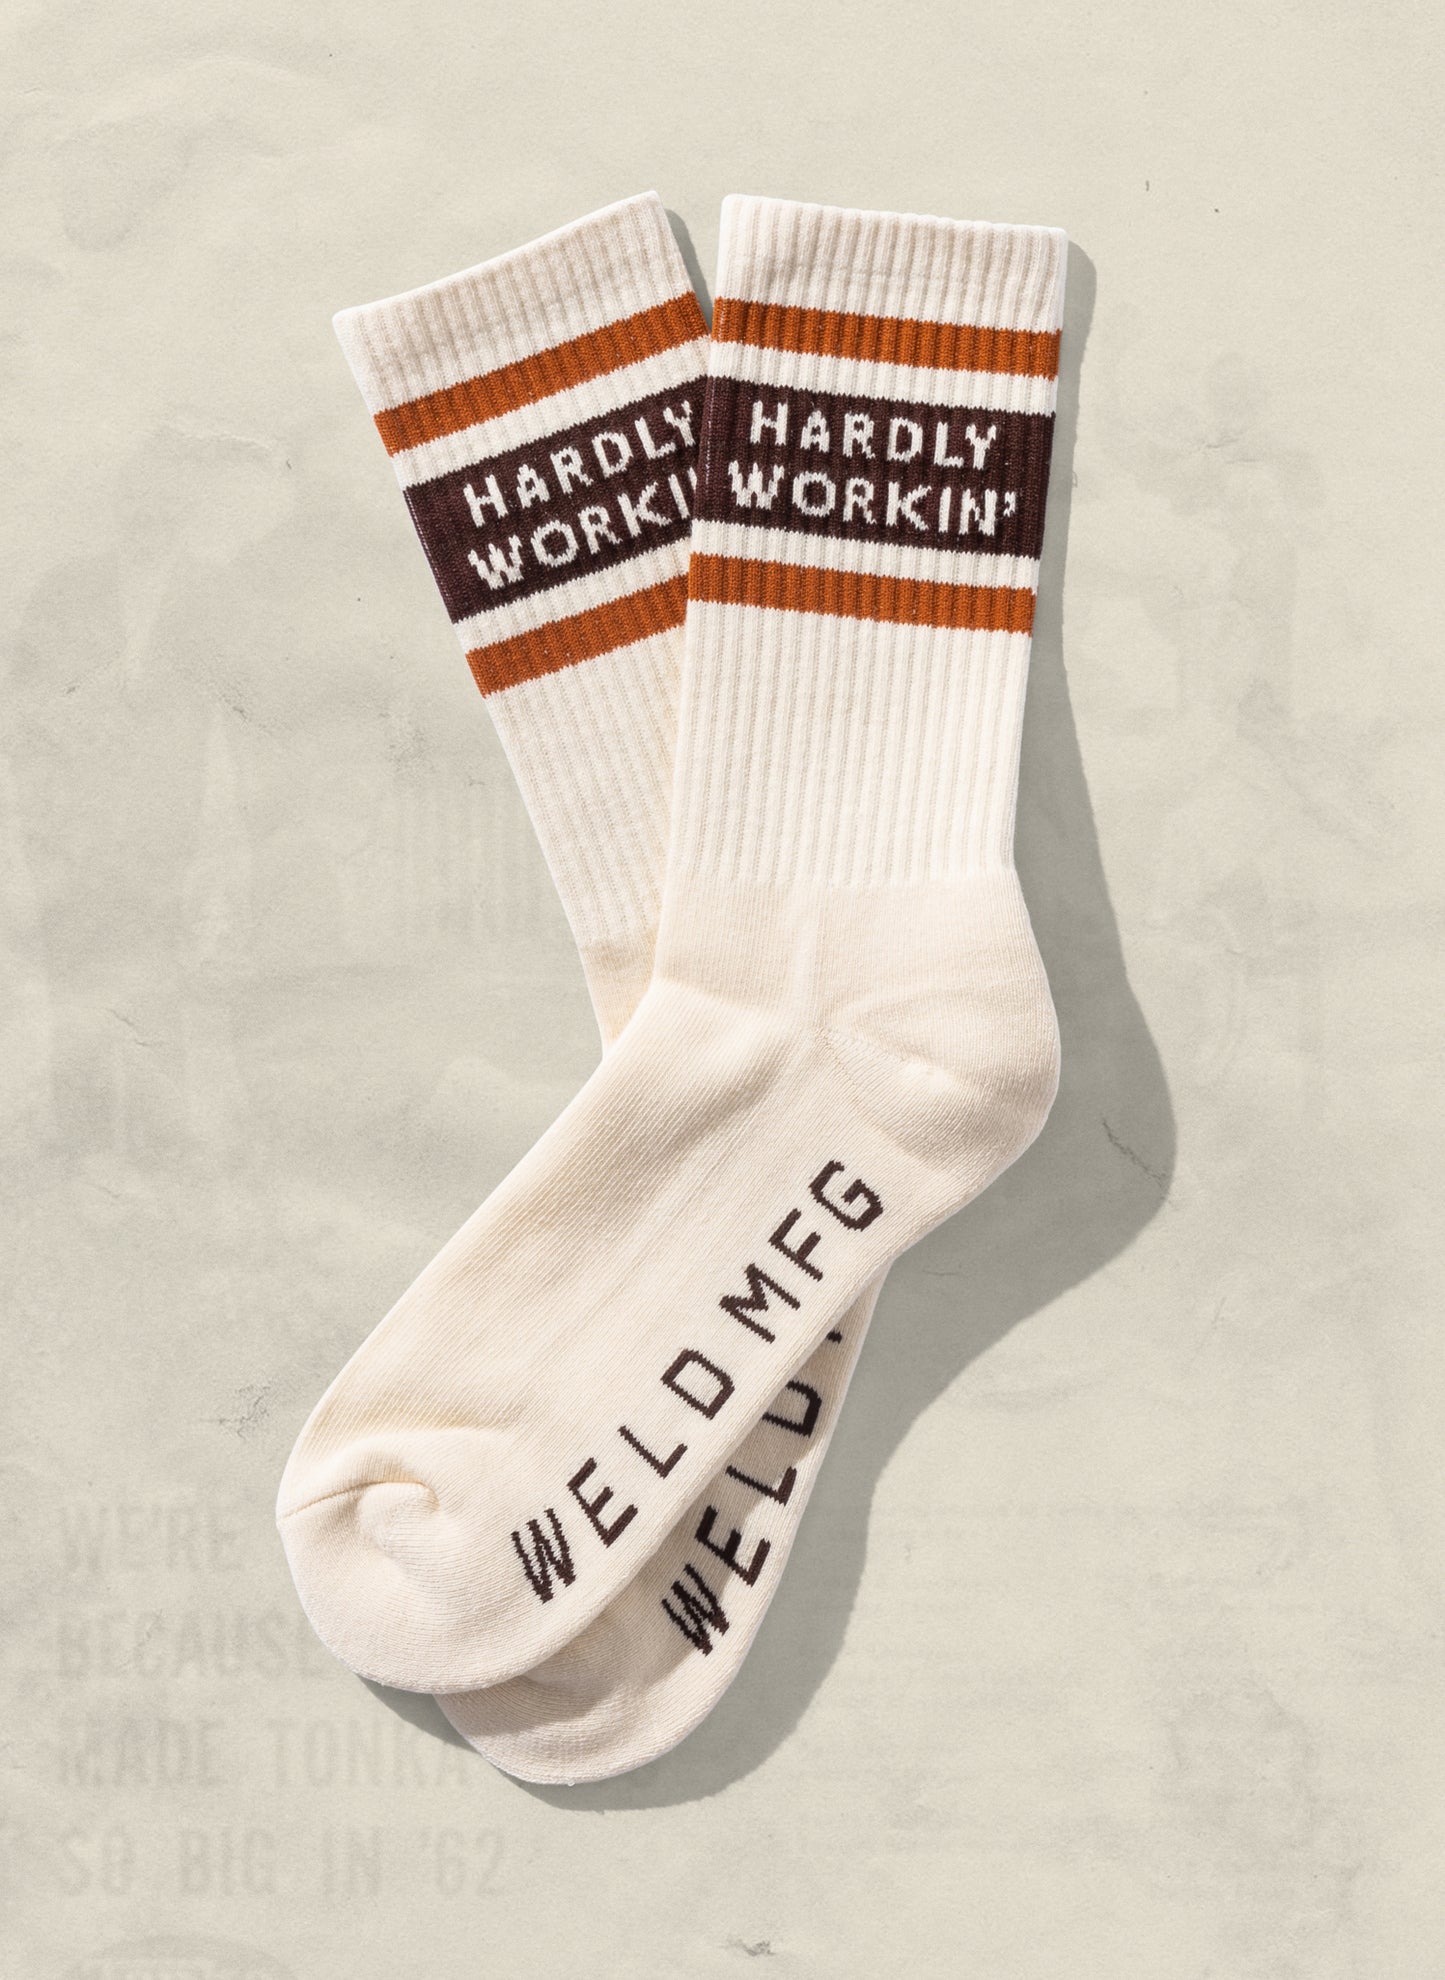 Hardly Workin' Crew Socks